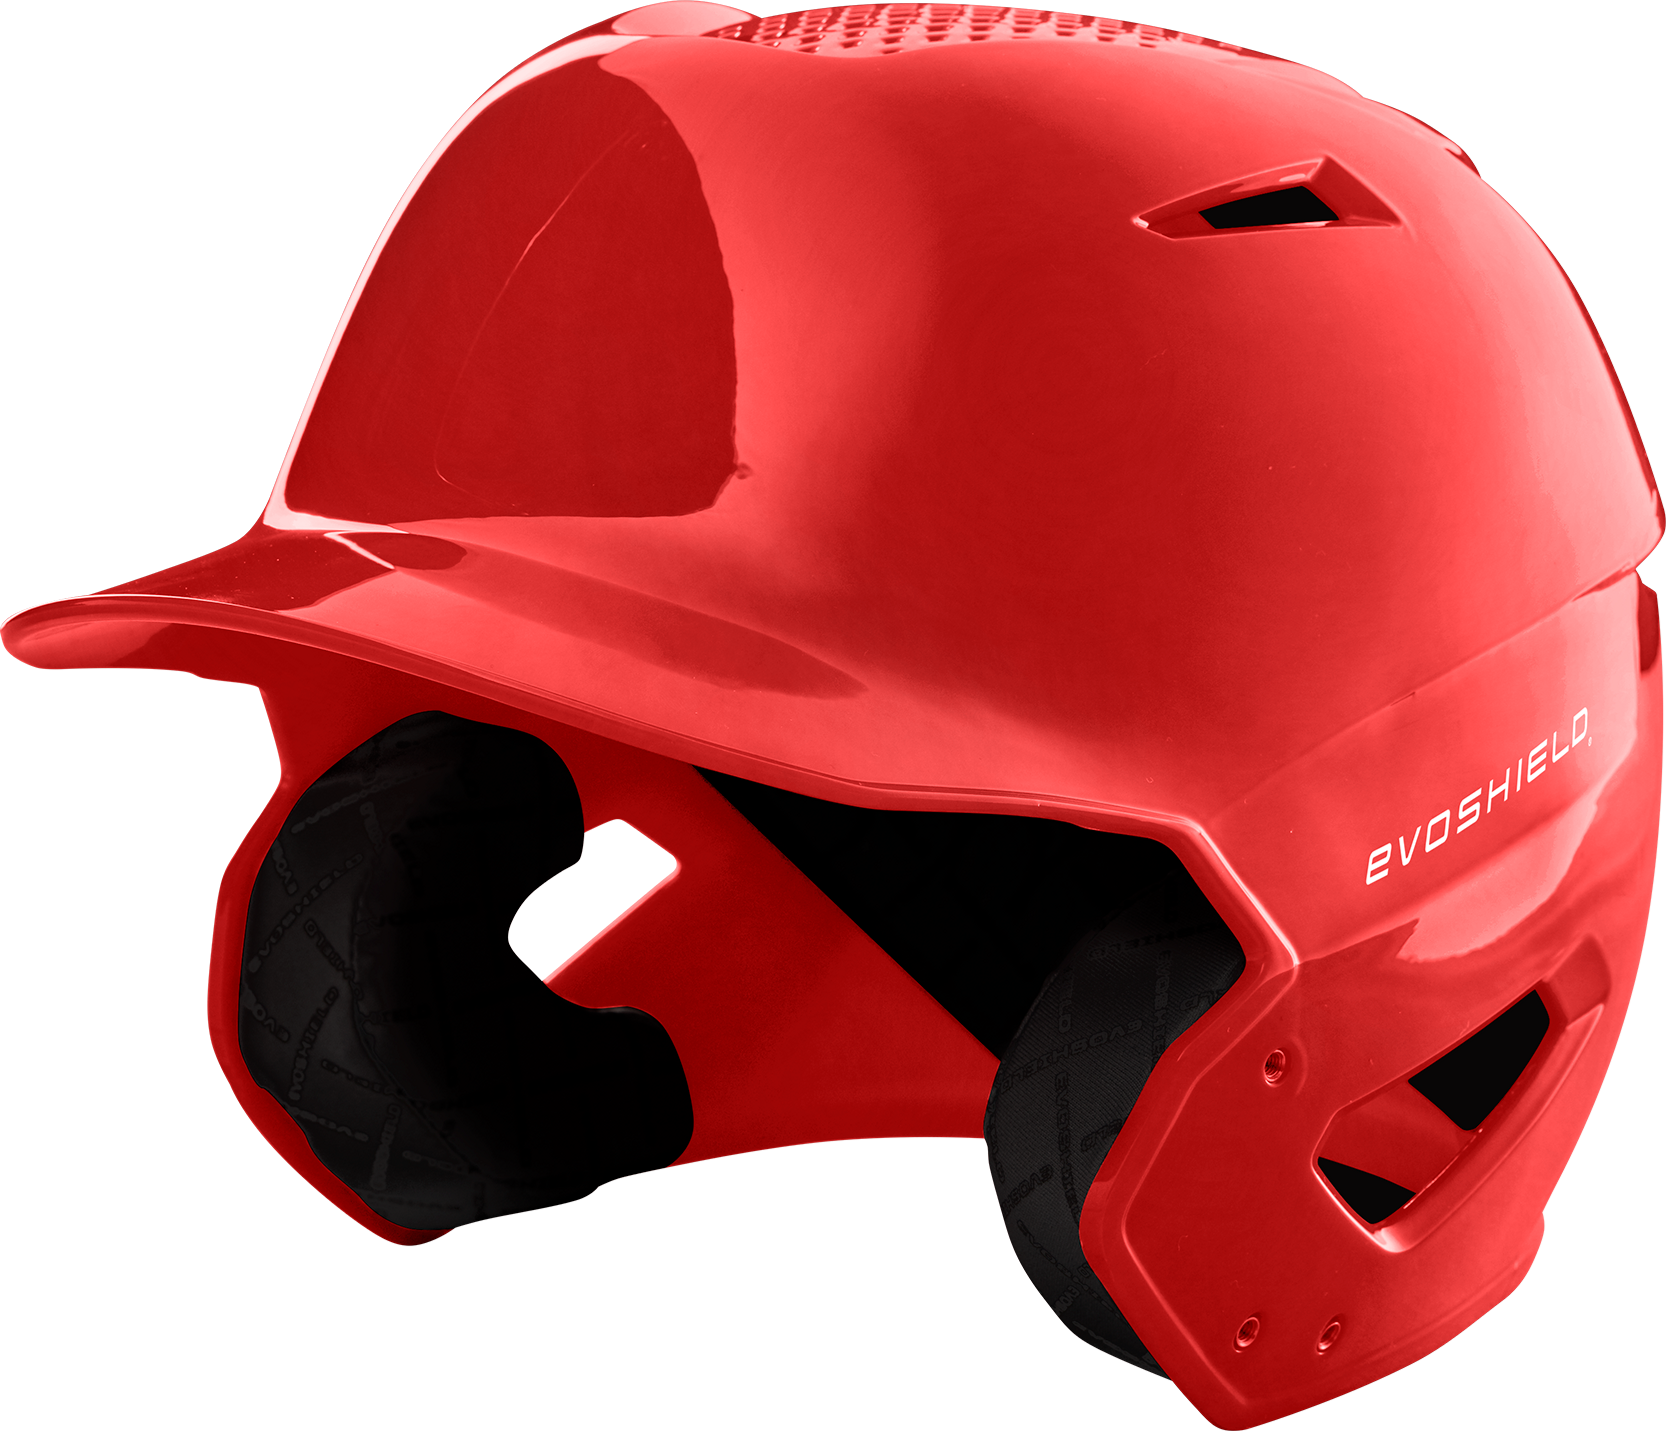 Evoshield Adult XVT Batting Helmet.